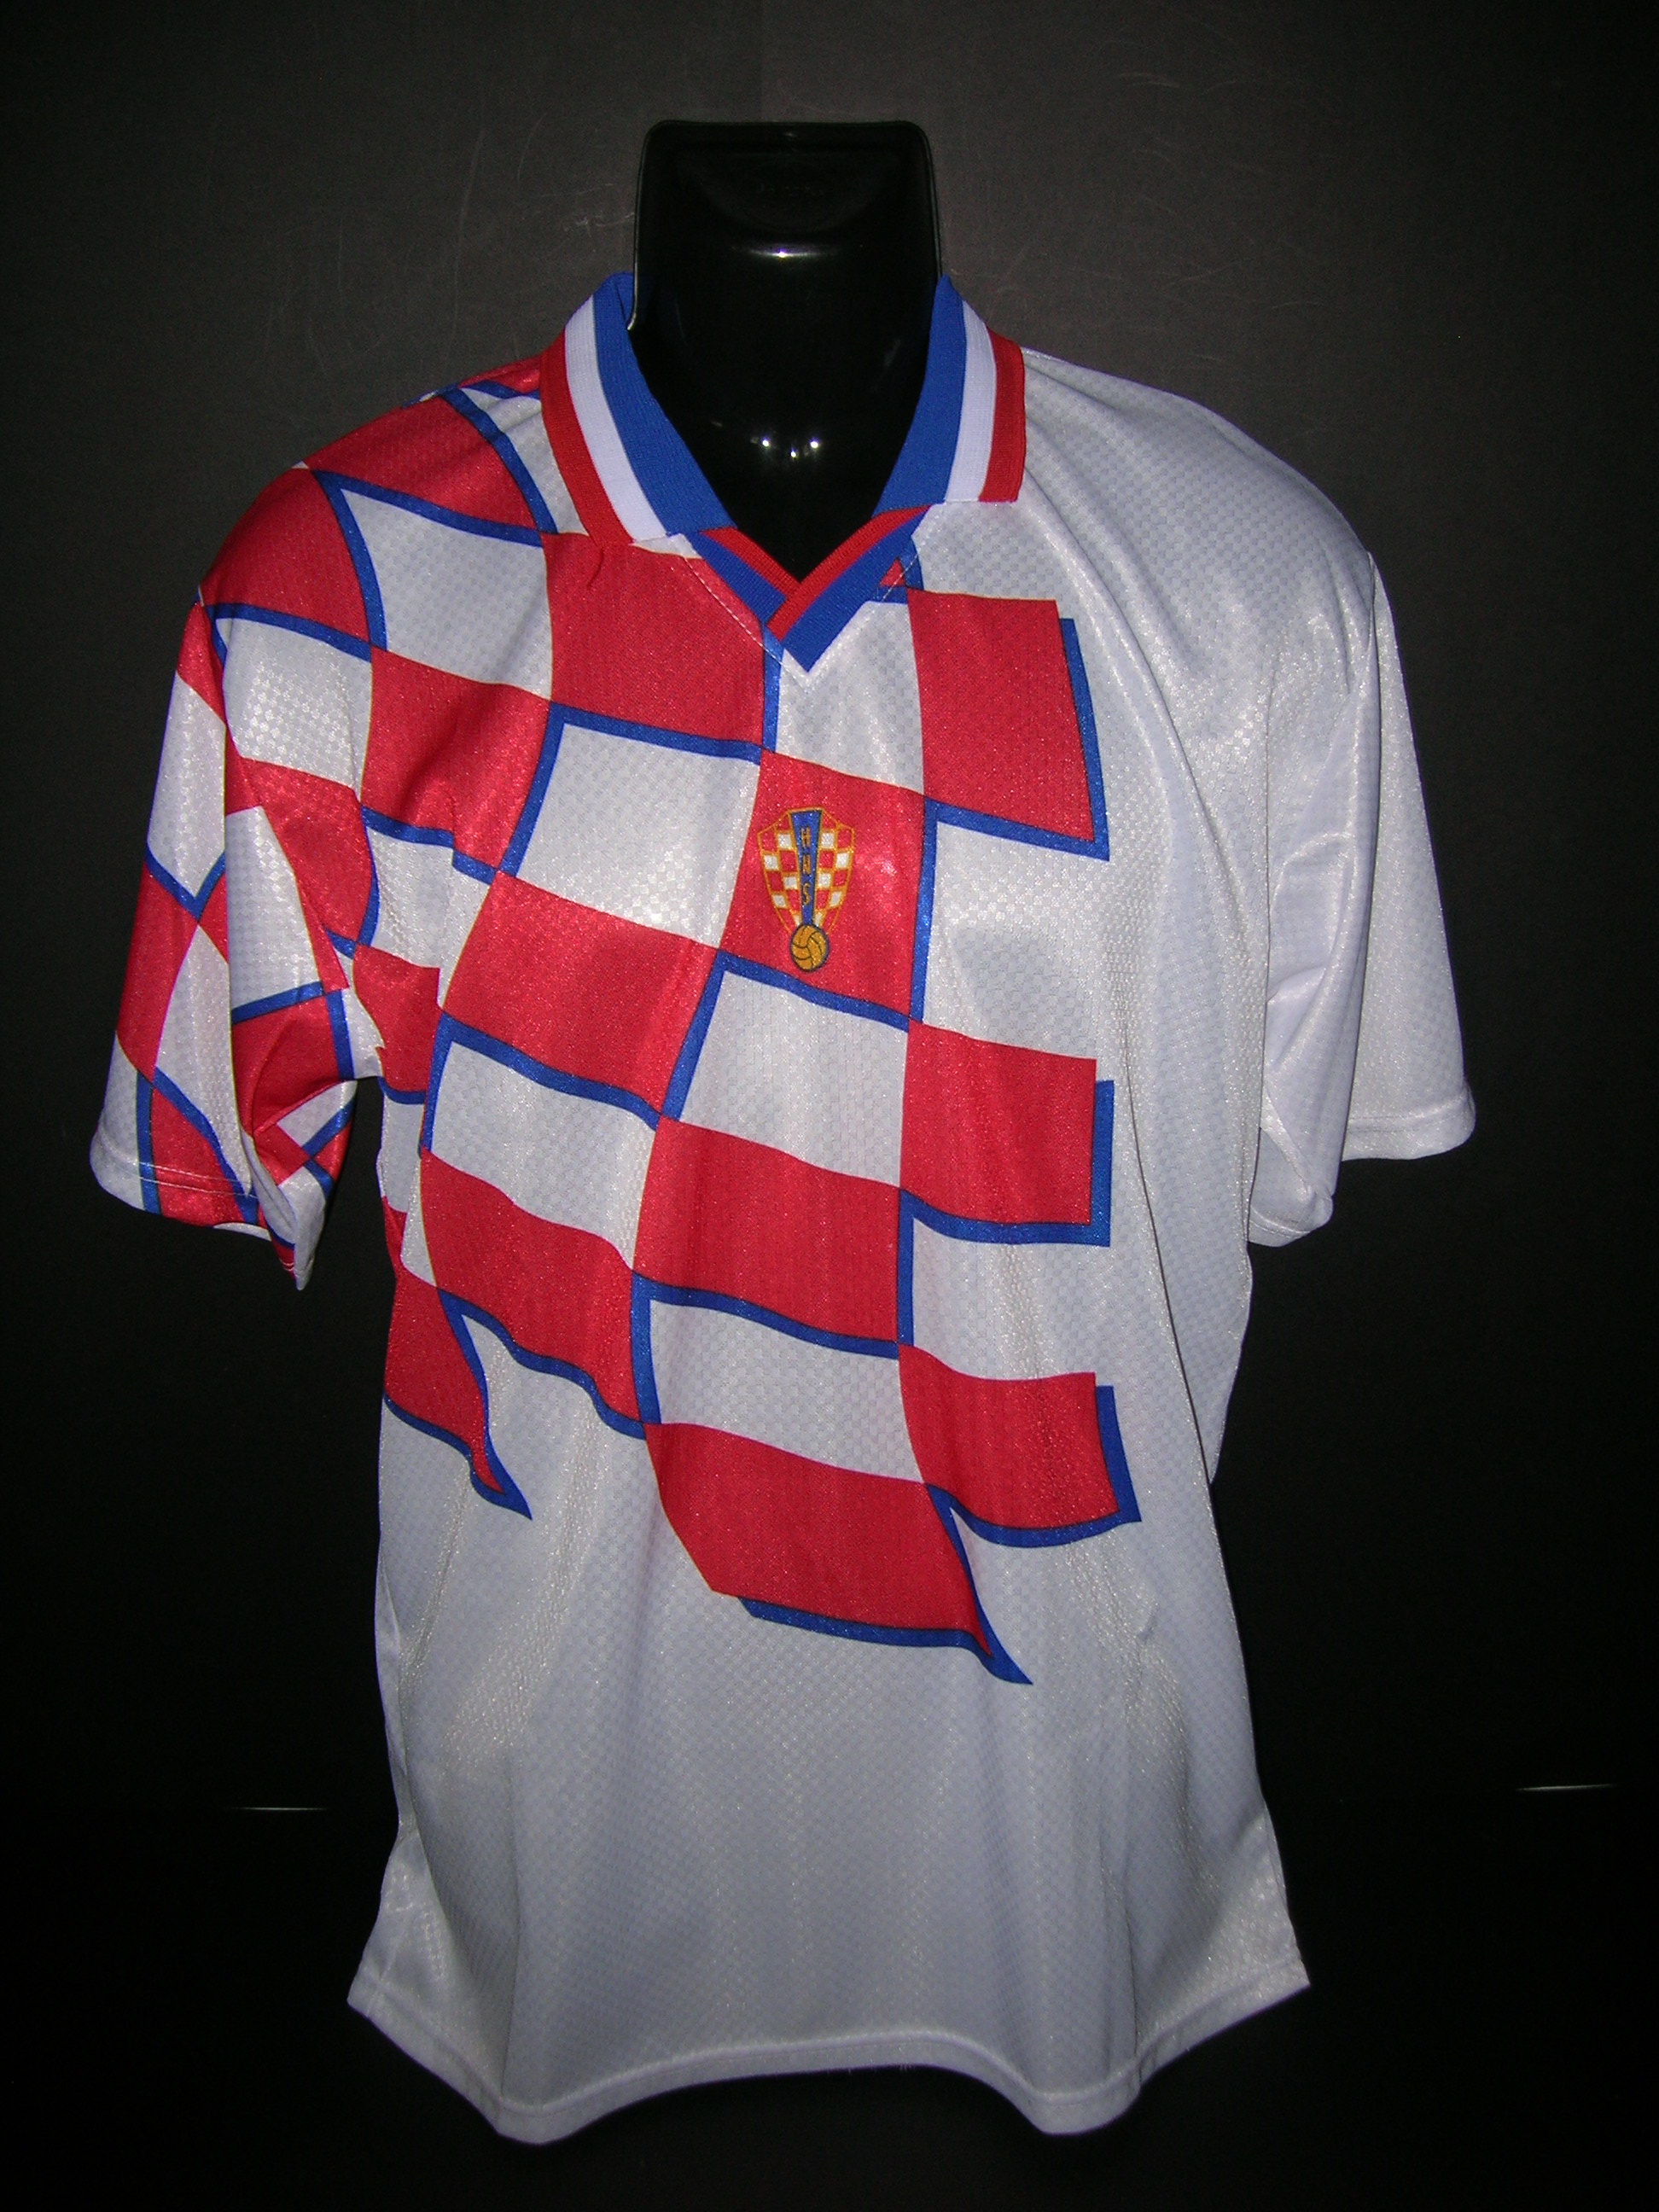 Croazia vintage usata da tifosi Croati mondiali 2006  - 213